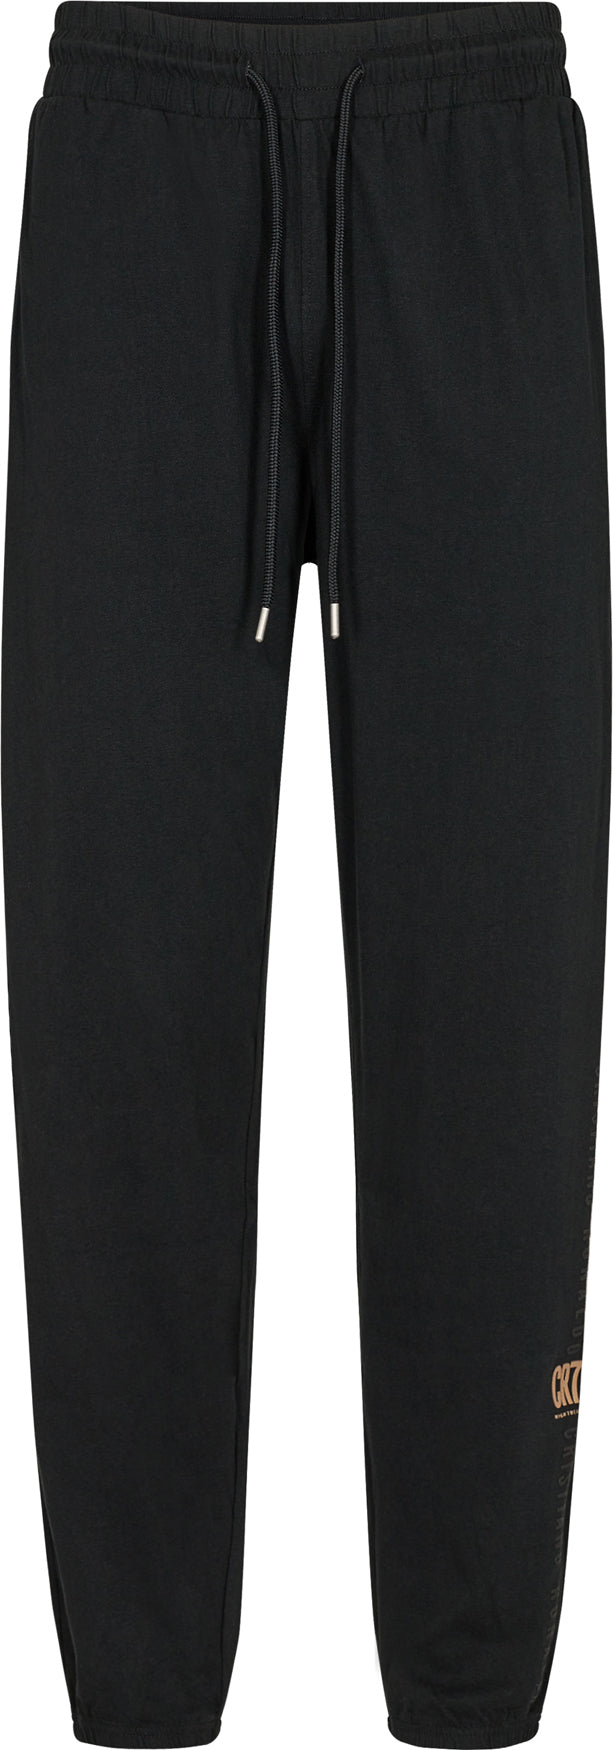 Men's Loungewear Set Long Sleeve | Pant